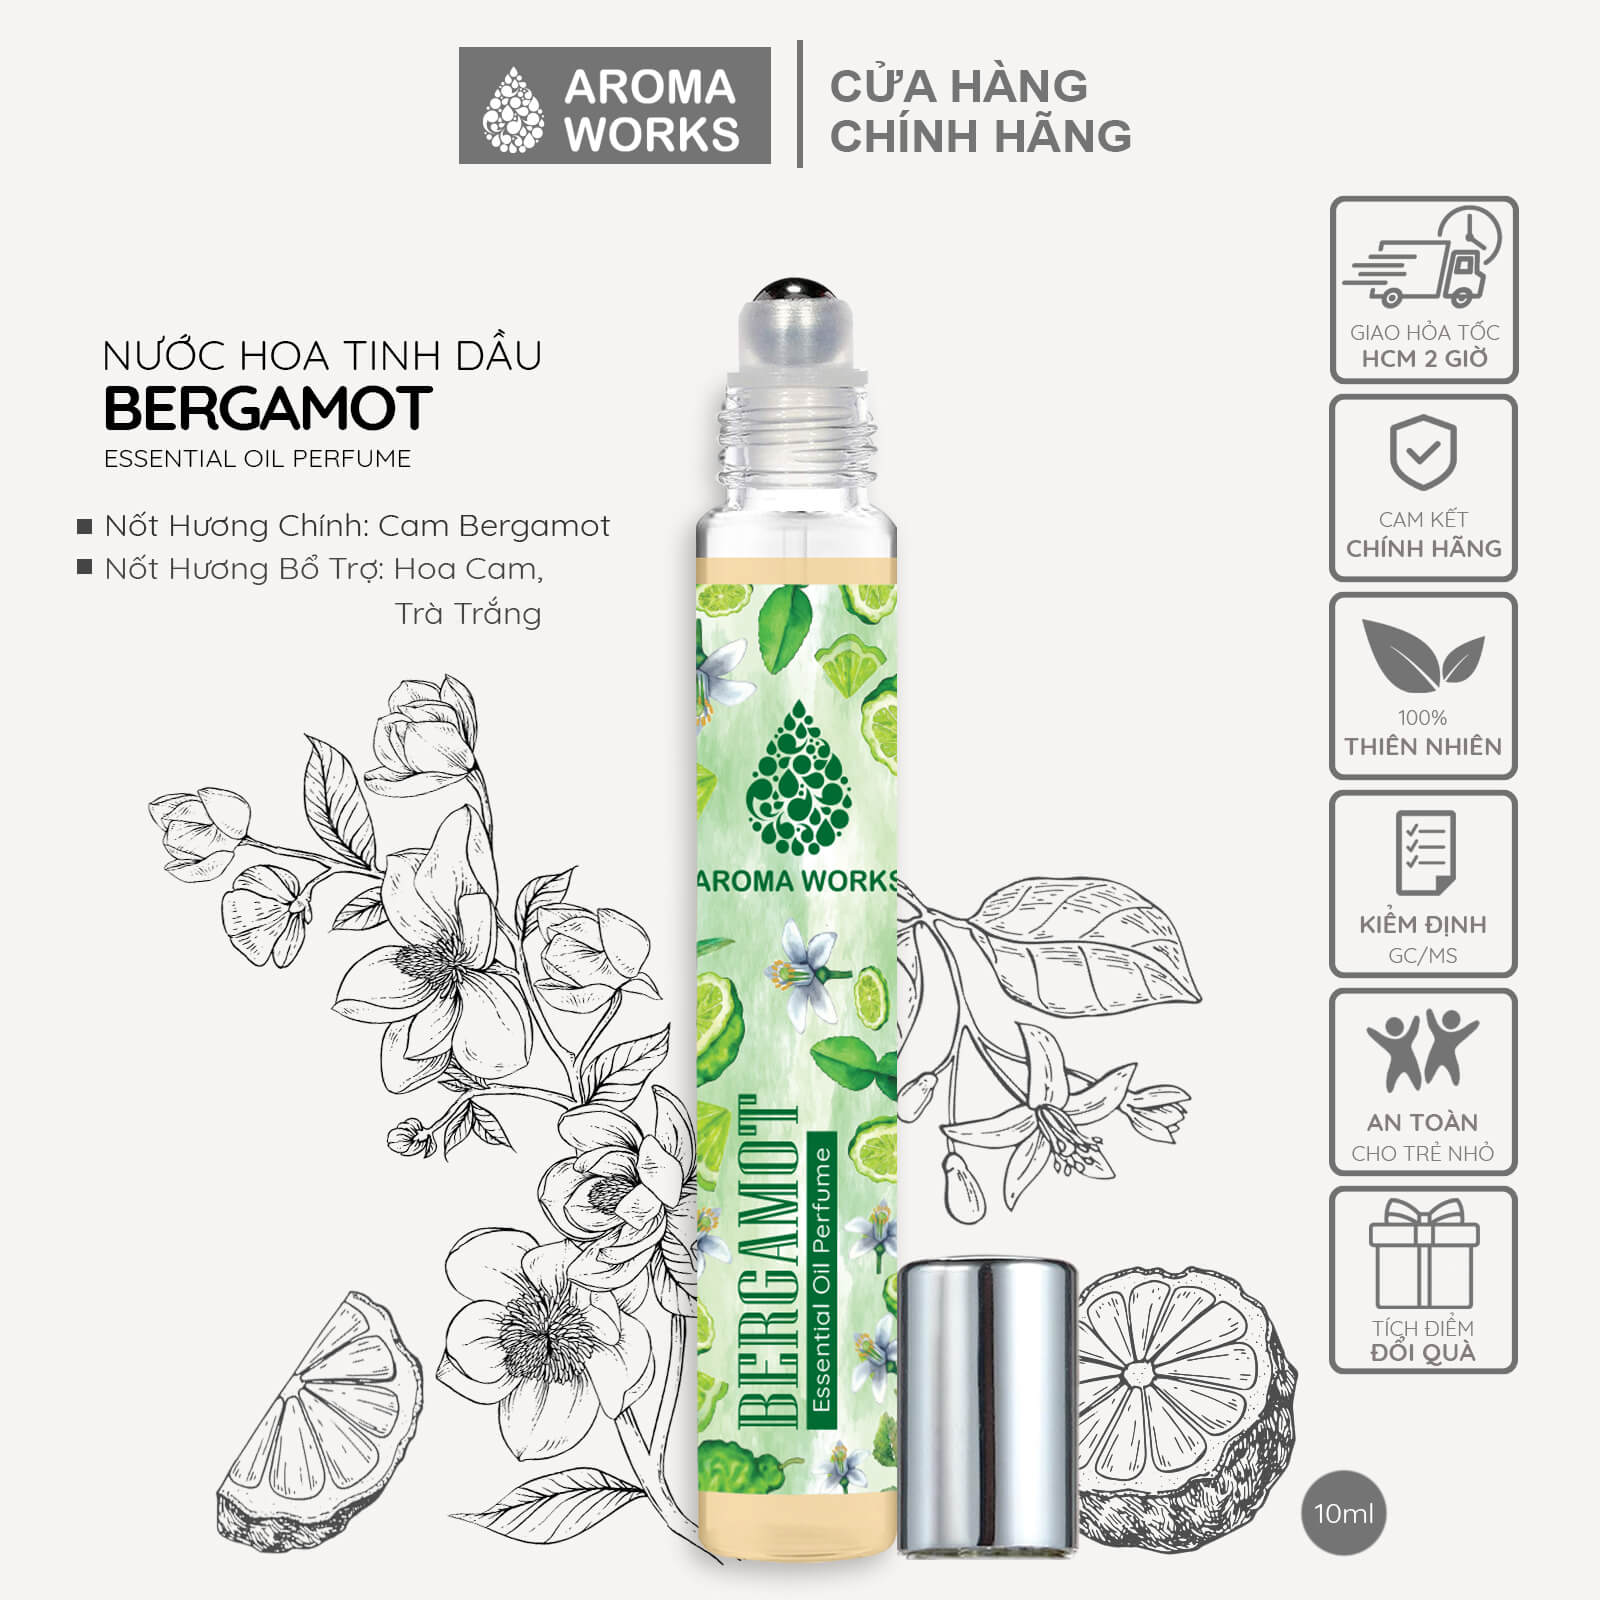 Tinh dầu nước hoa không cồn, lưu hương lâu Aroma Works Bergamot Essential Oil Perfume 10ml - Hương Cam Bergamot